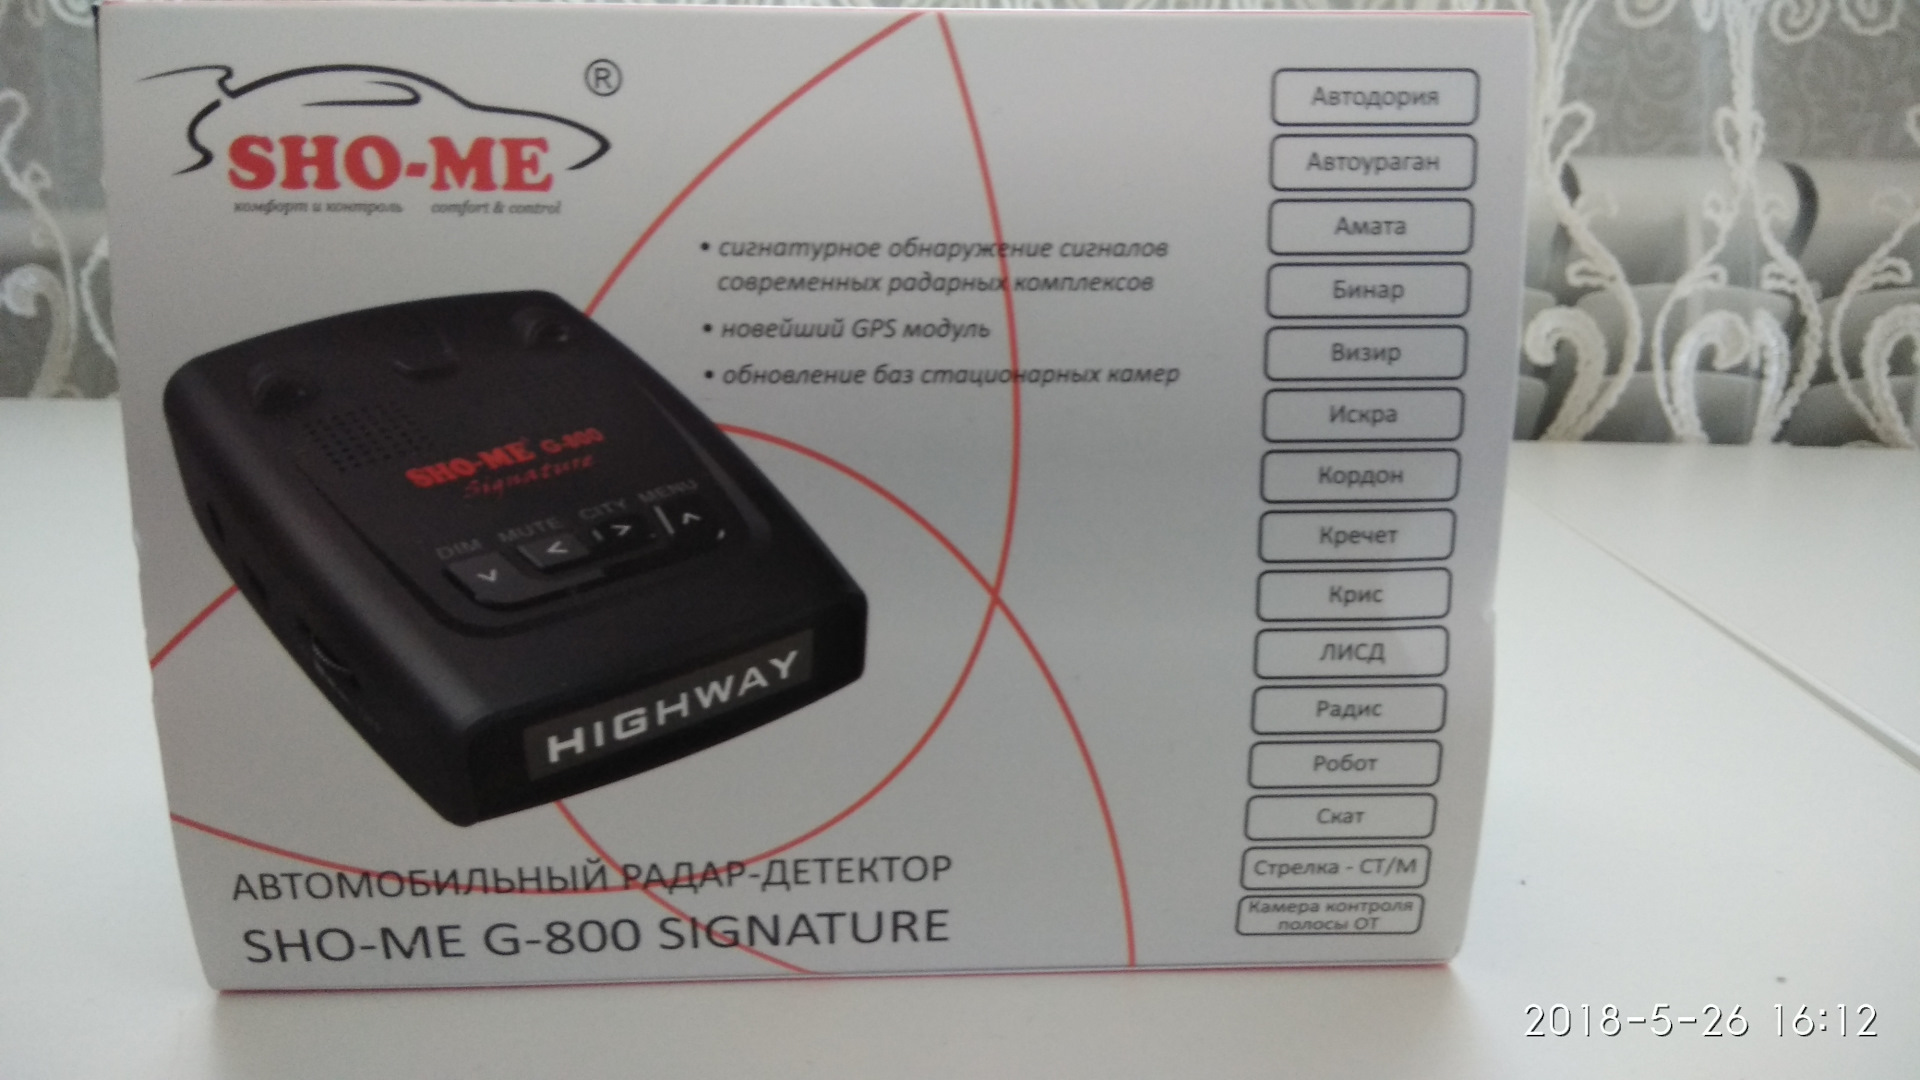 Sho-me g-525 Signature. Sho-me g-800 Signature. Sho me g800. Прошивка радар-детектора Sho-me g-800 Signature. Настроить sho me